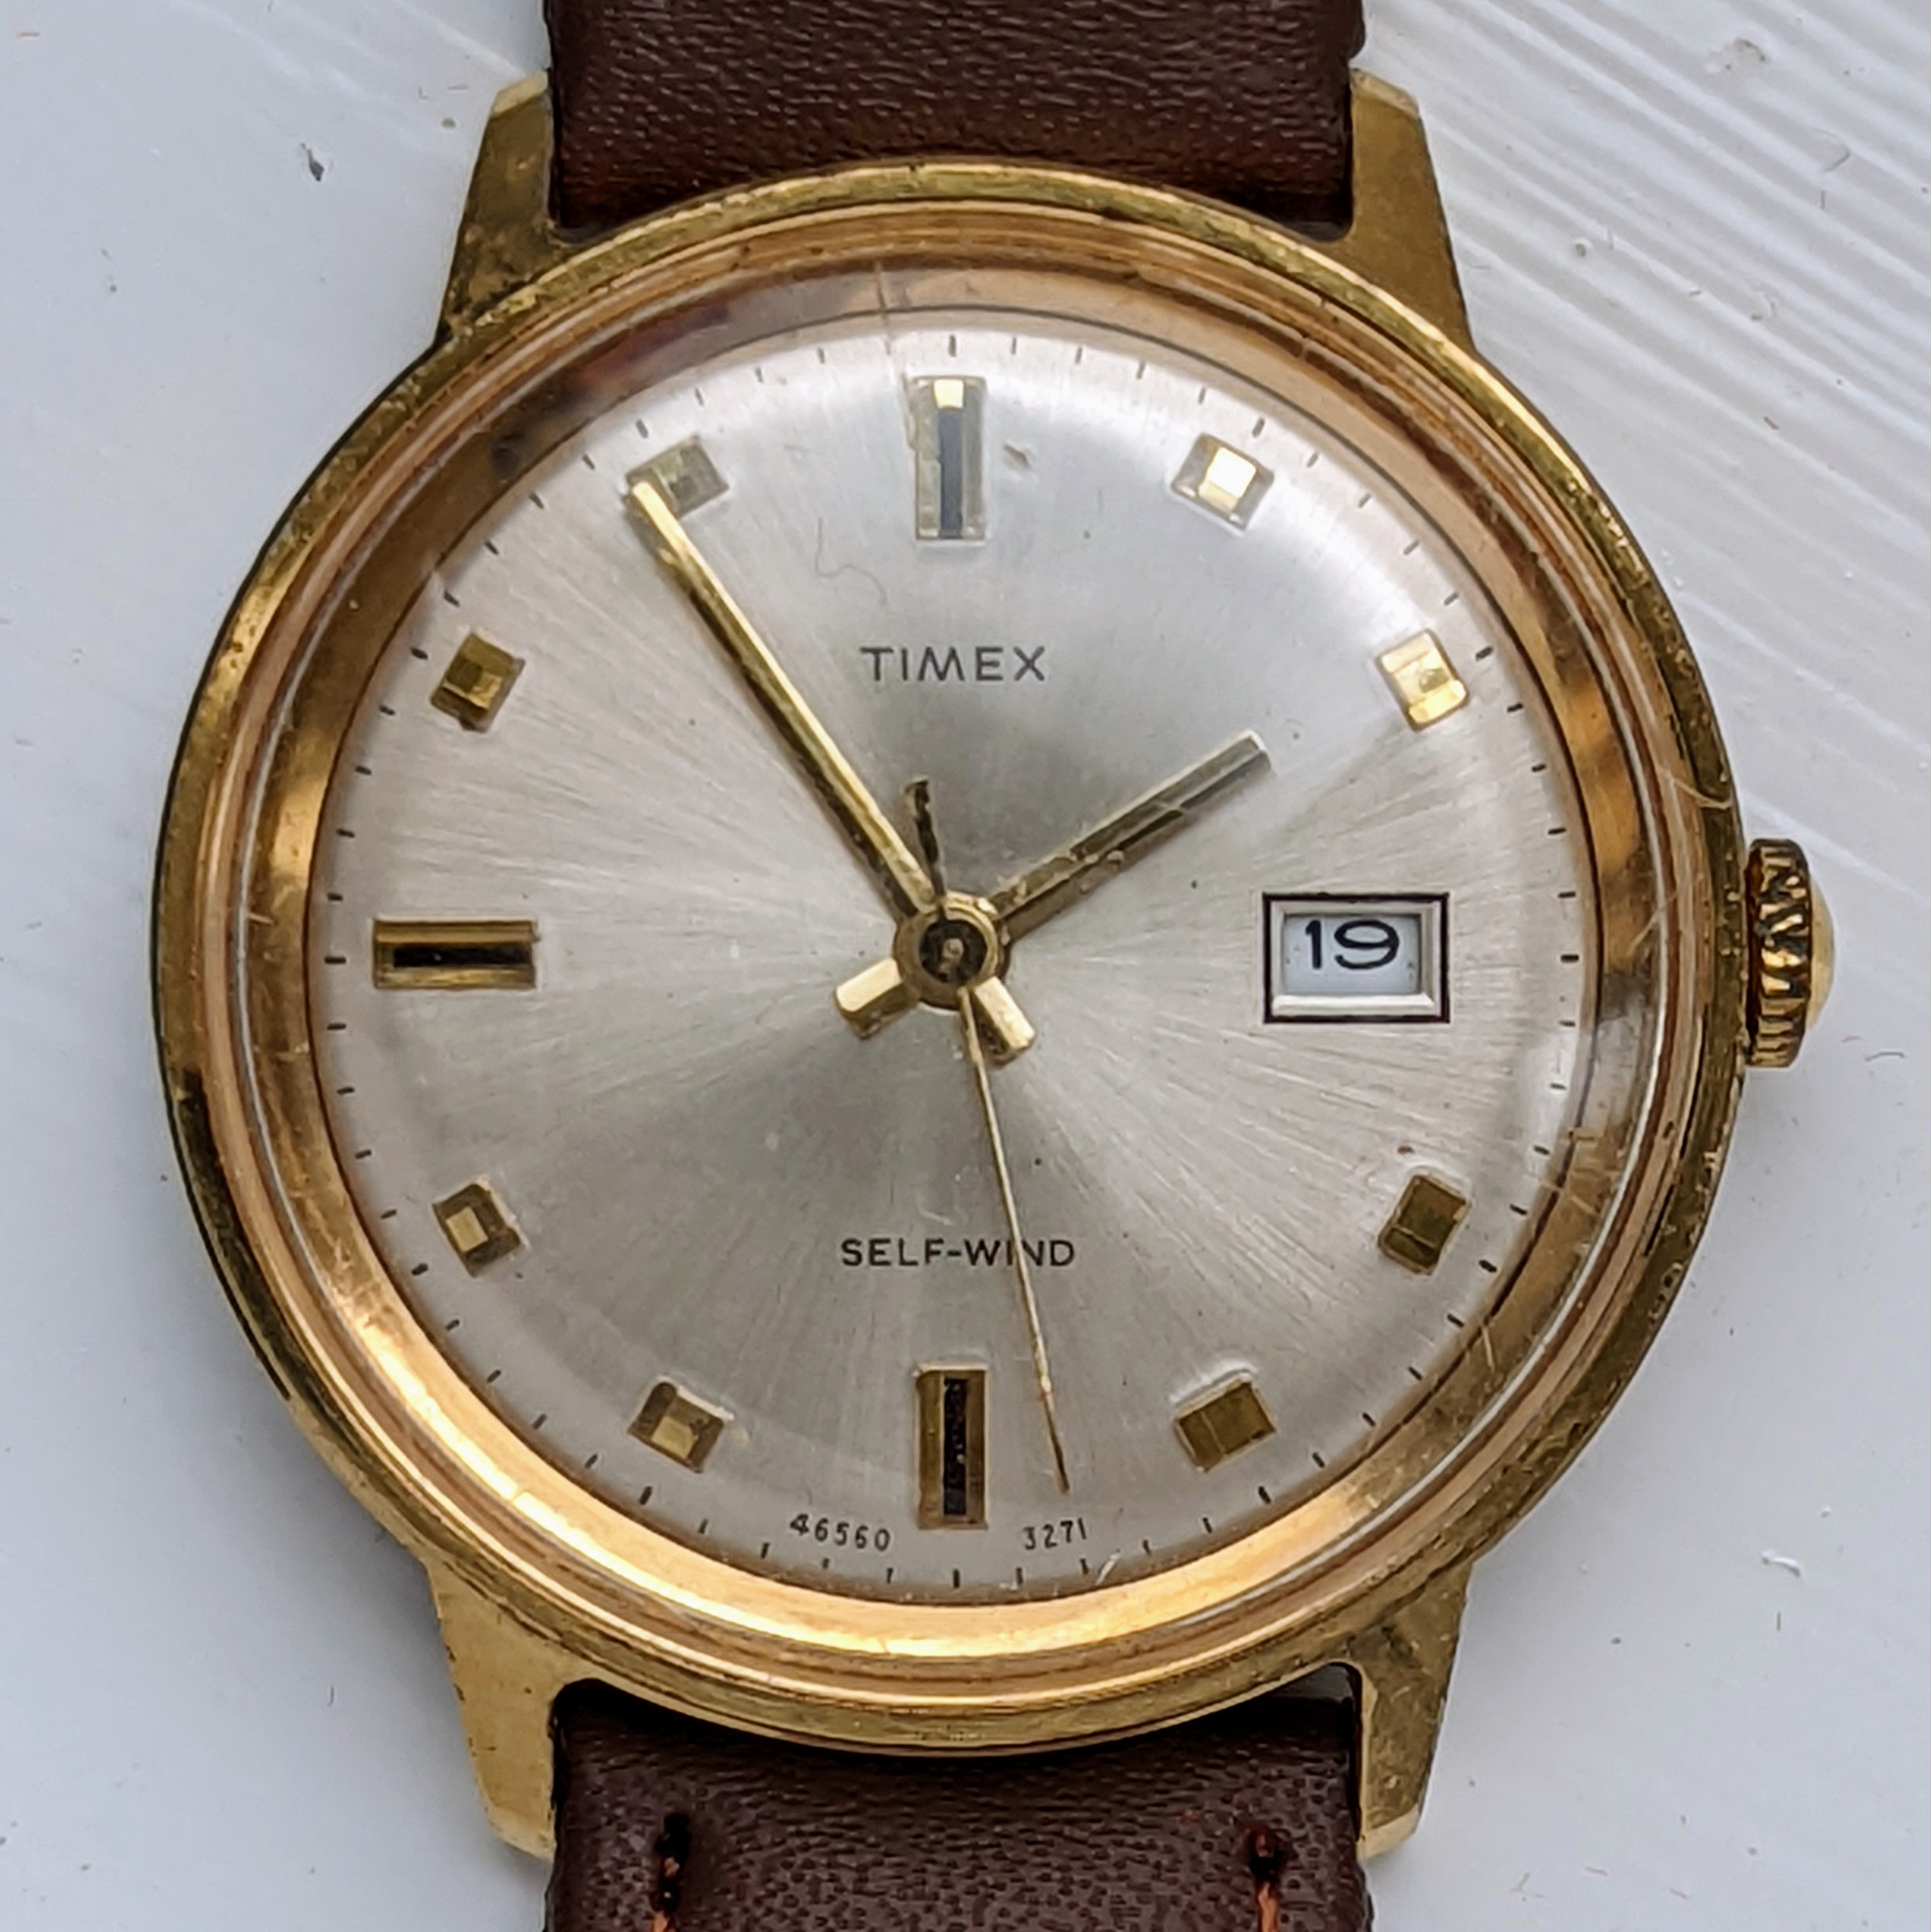 Timex Viscount 46560 3271 [1971]